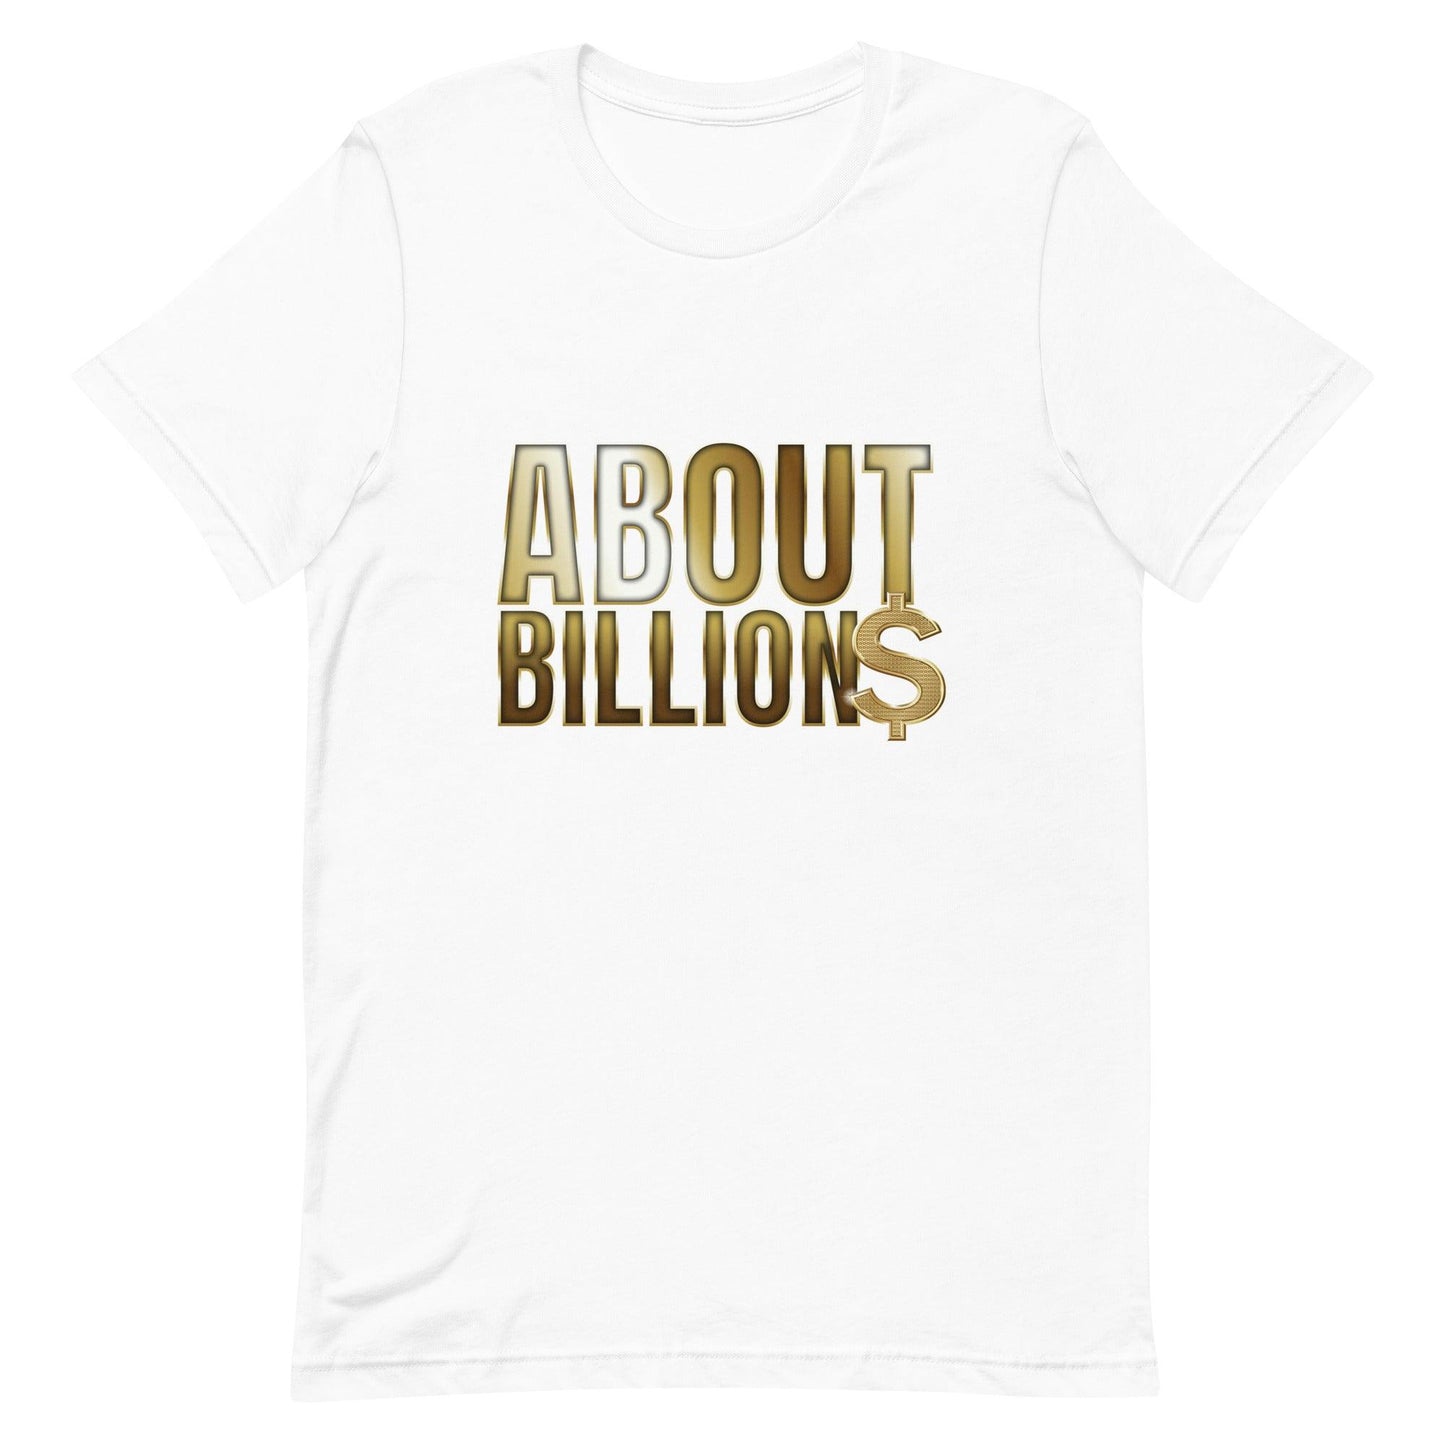 Adrien Broner "About Billions" t-shirt - Fan Arch